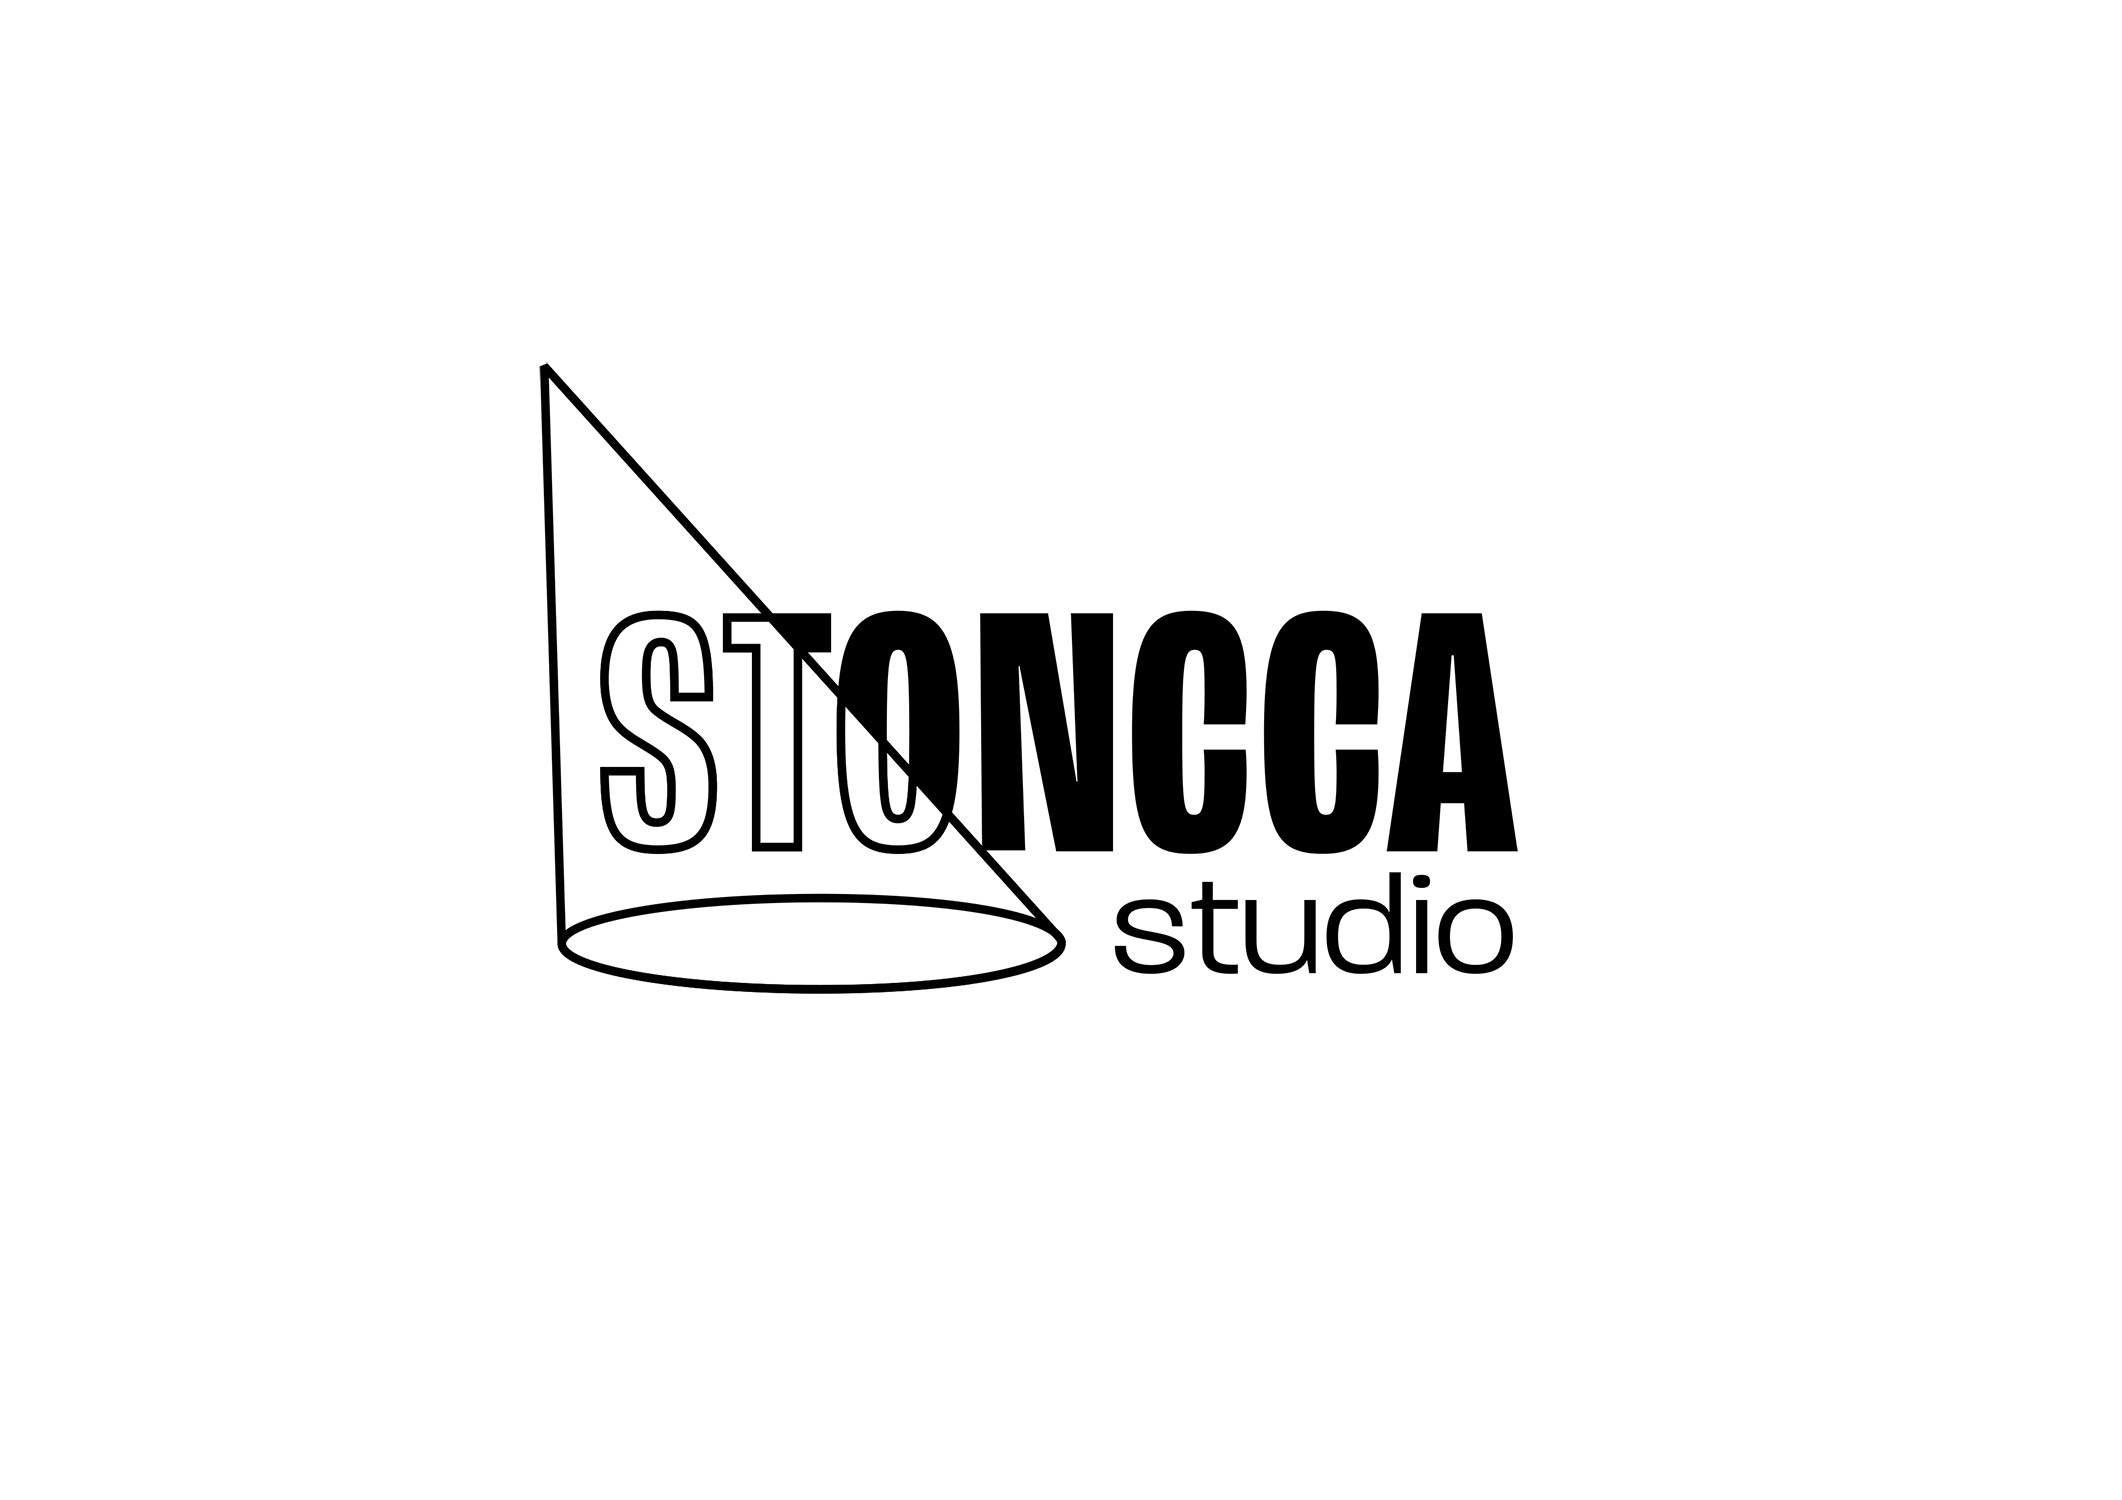 stoncca studio, logo, bureau de production